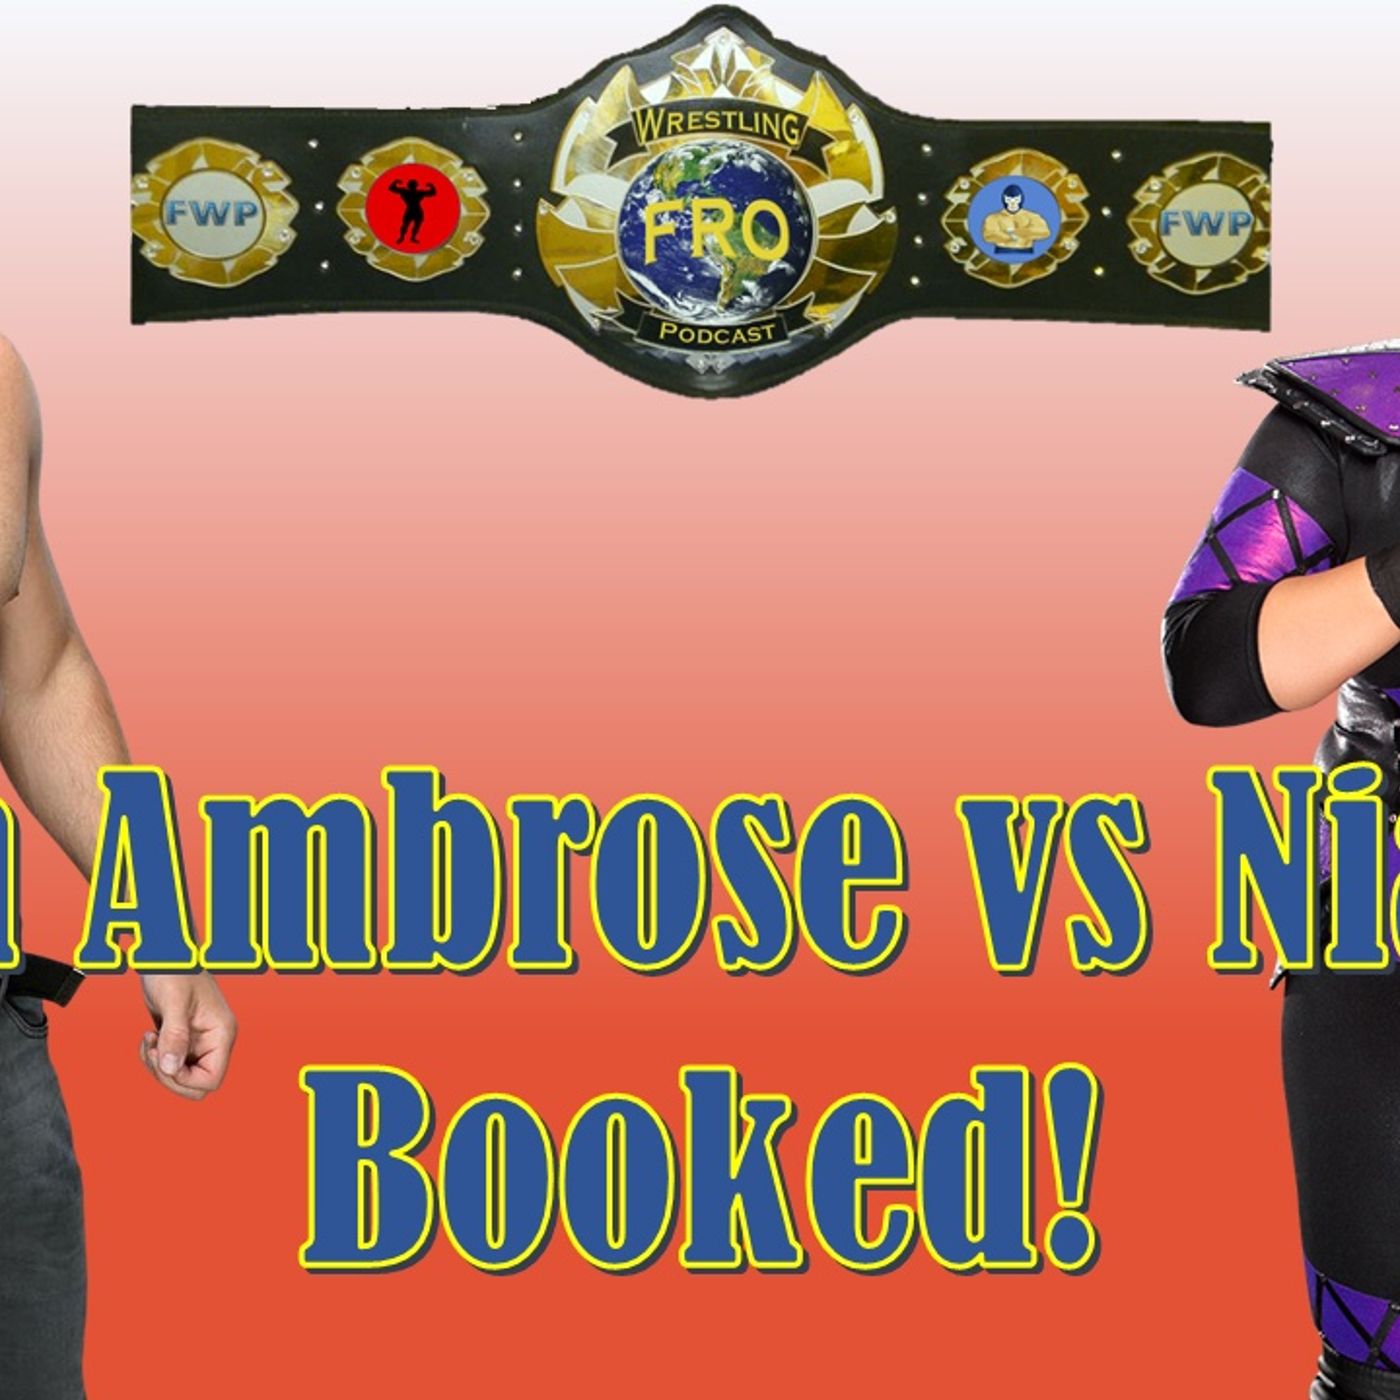 Dean Ambrose vs Nia Jax Booked